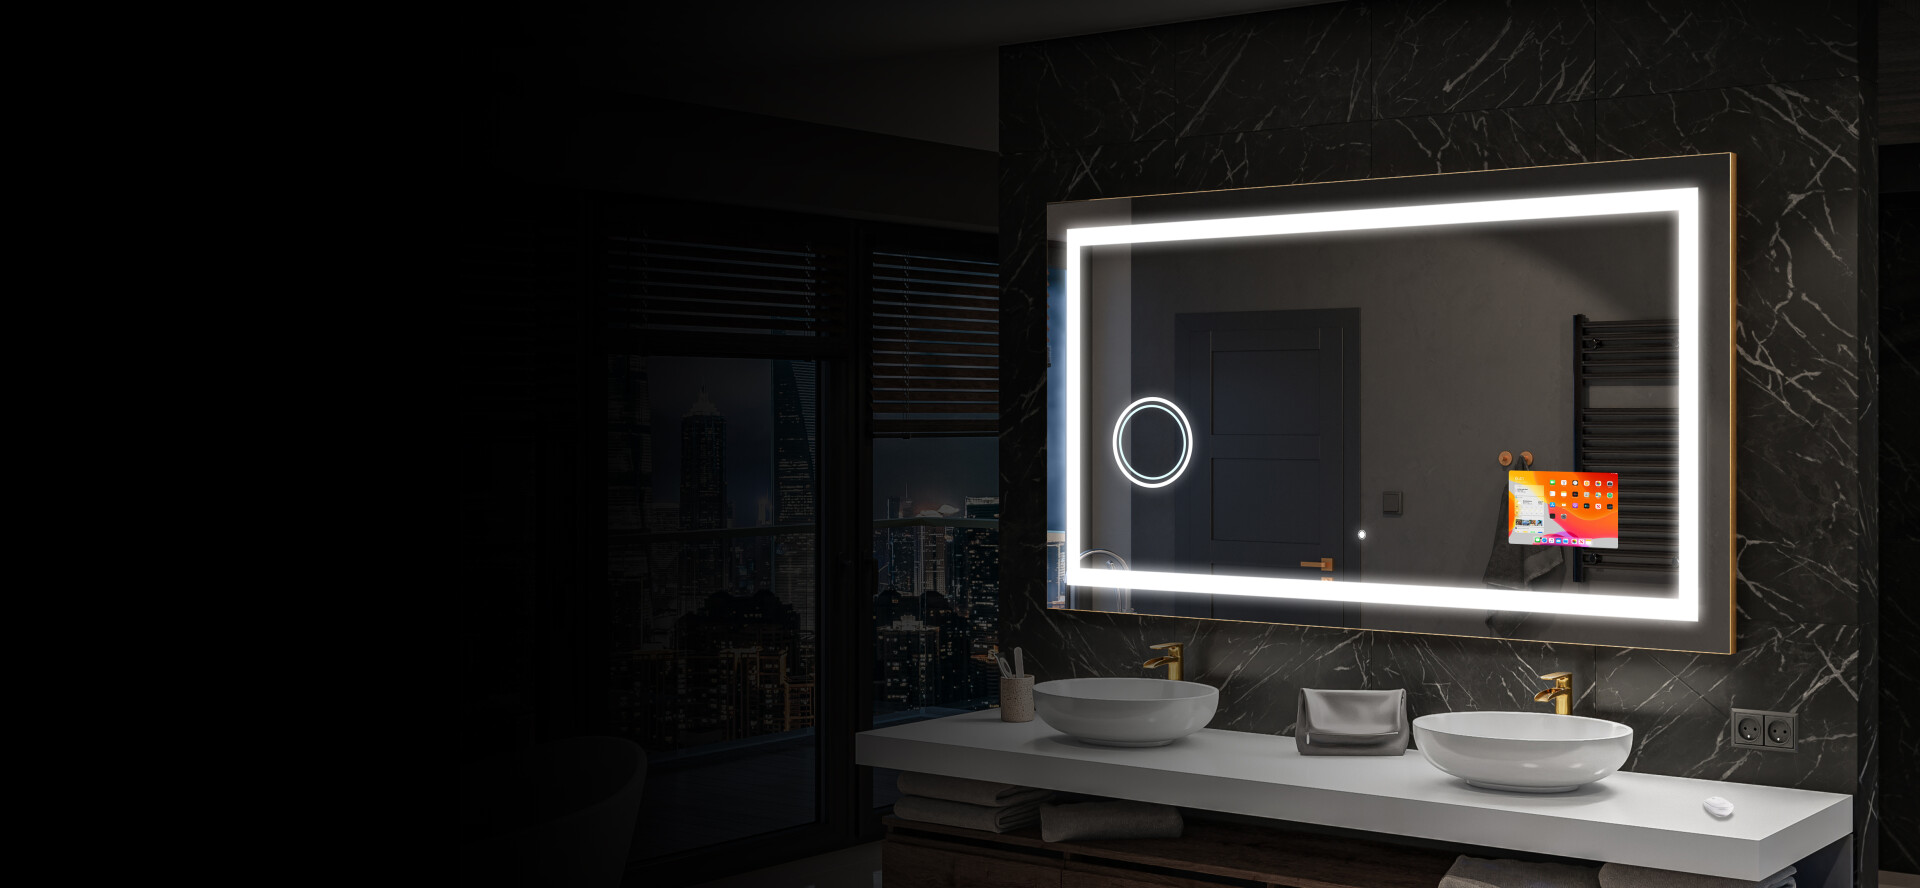 Artforma - Smart LED Illuminated Mirror Cabinet - L27 Sarah 100 x 72cm